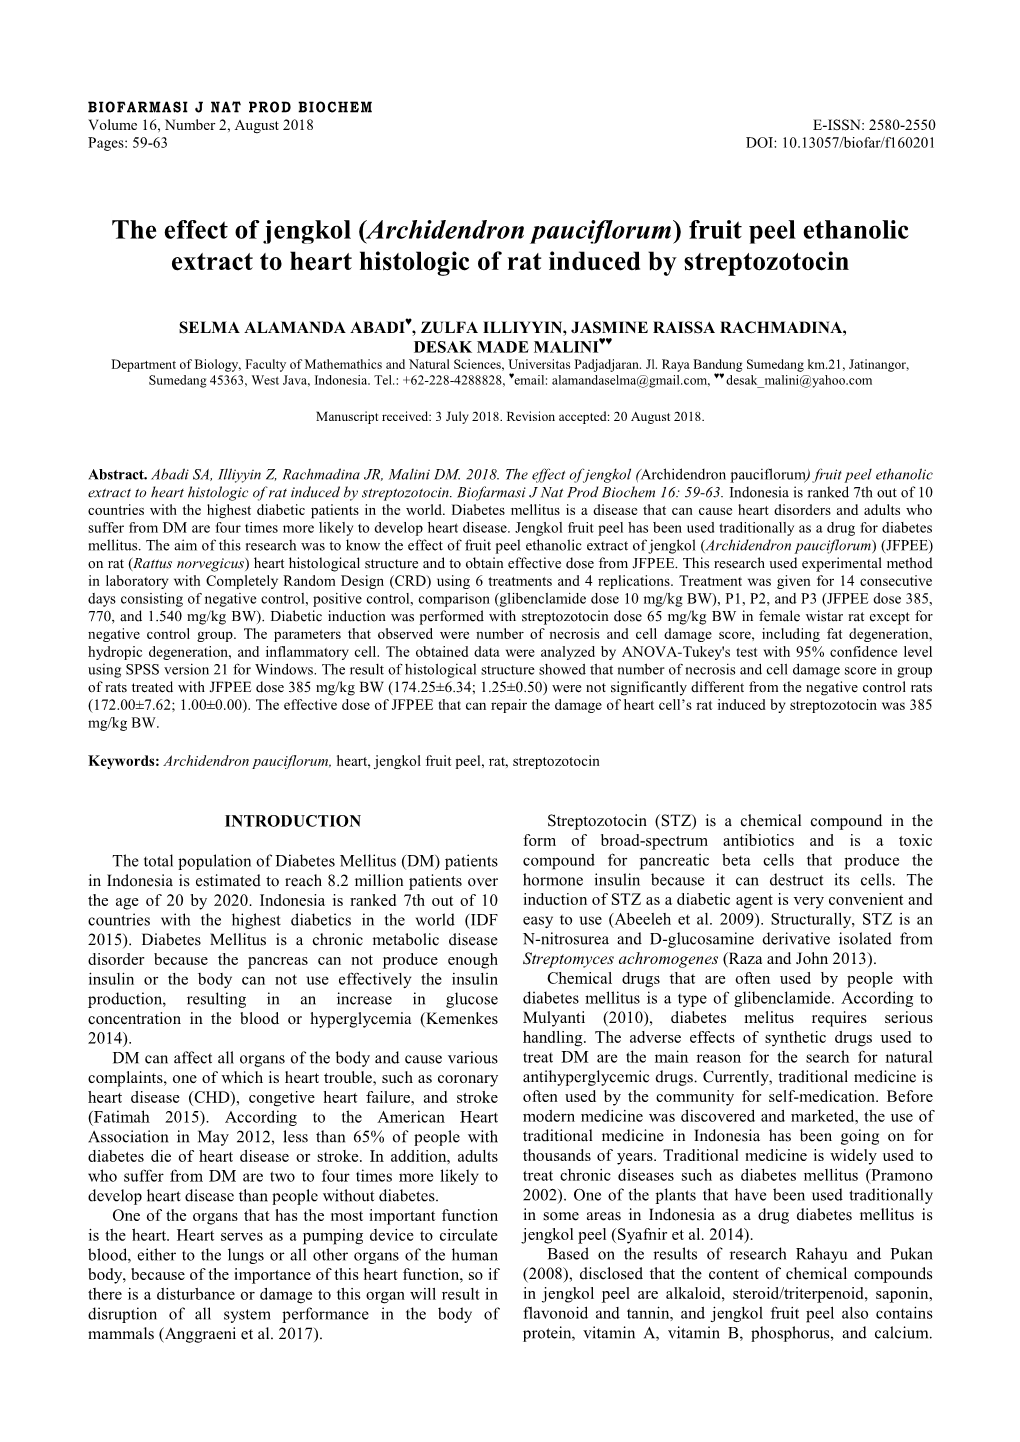 The Effect of Jengkol (Archidendron Pauciflorum) Fruit Peel Ethanolic Extract to Heart Histologic of Rat Induced by Streptozotocin